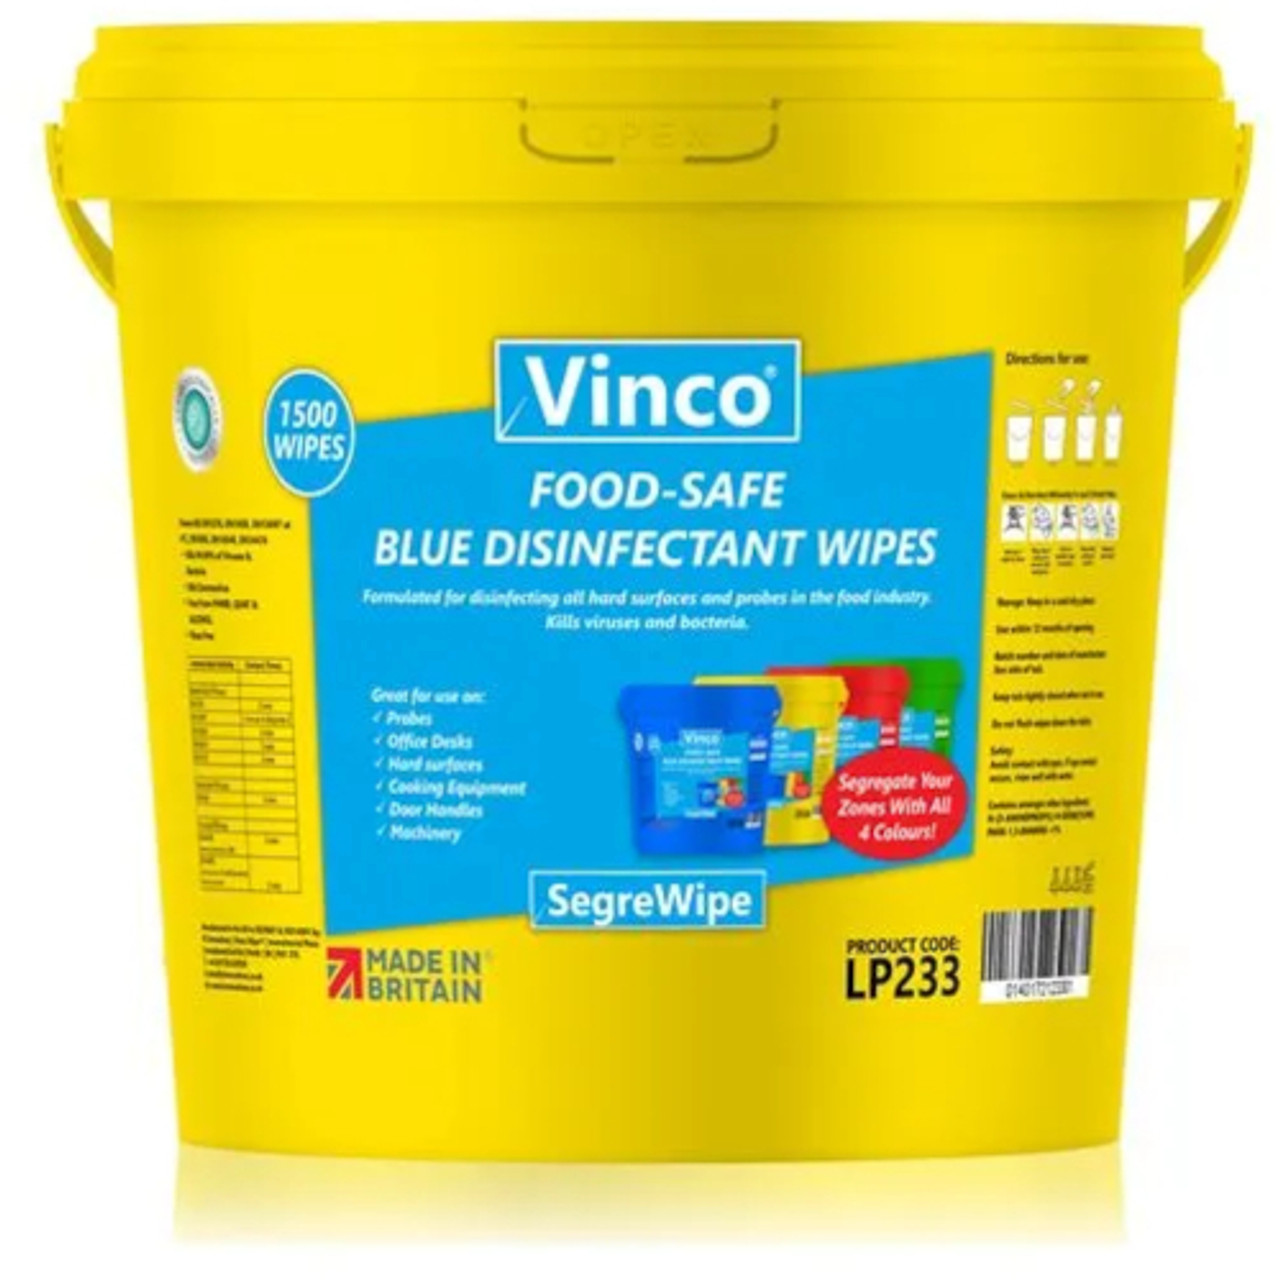 Vinco-SegreWipe Food-Safe Disinfectant Wet Wipe - 1500 Wipes - Yellow Bucket - LP233